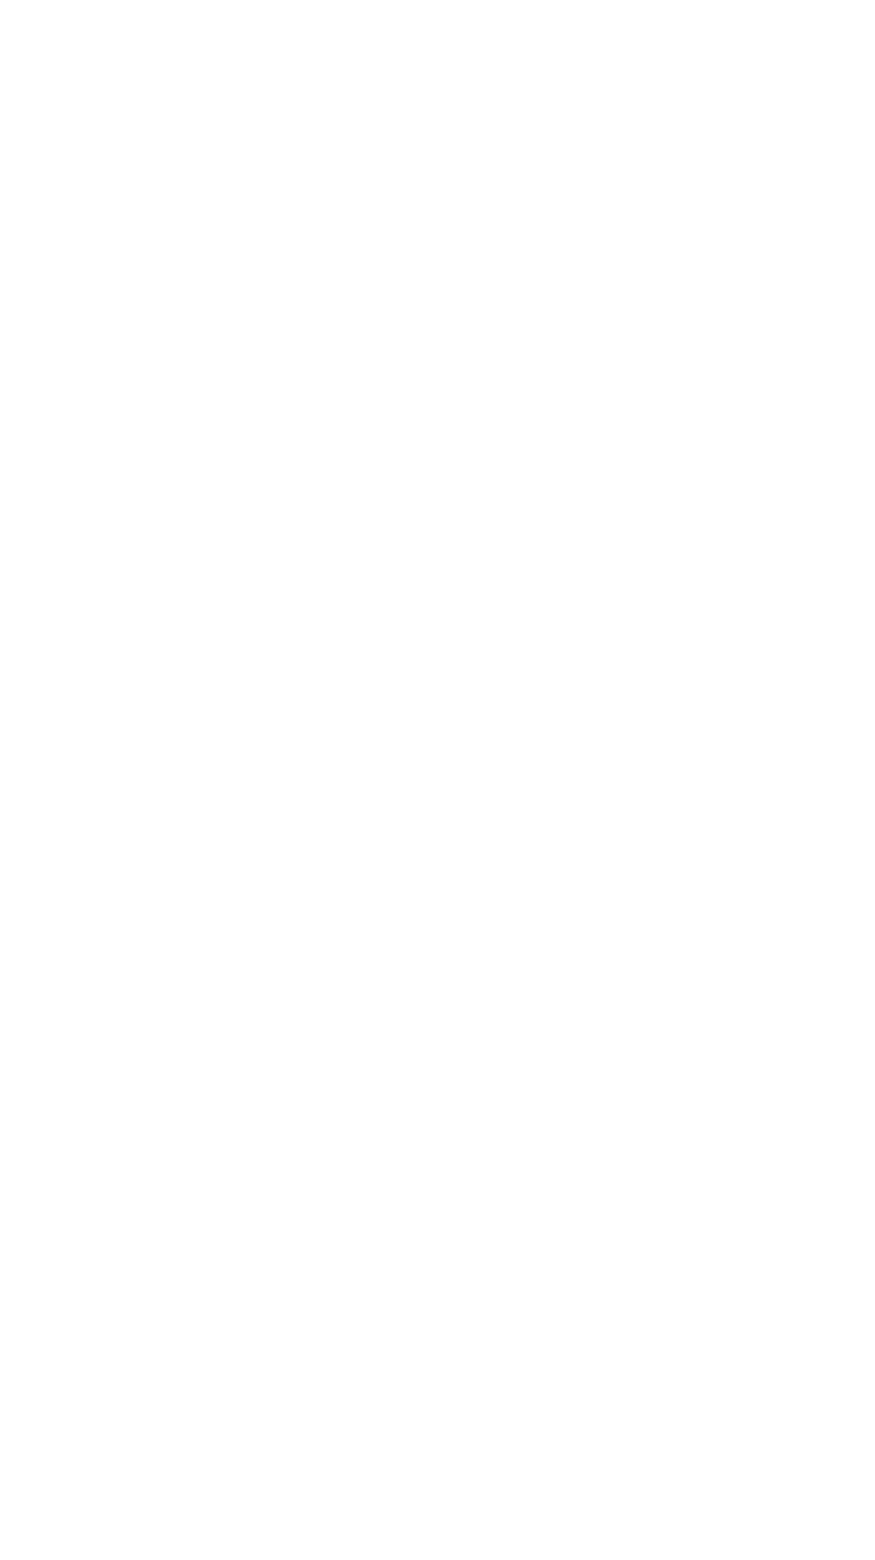 International Seaways logo pour fonds sombres (PNG transparent)